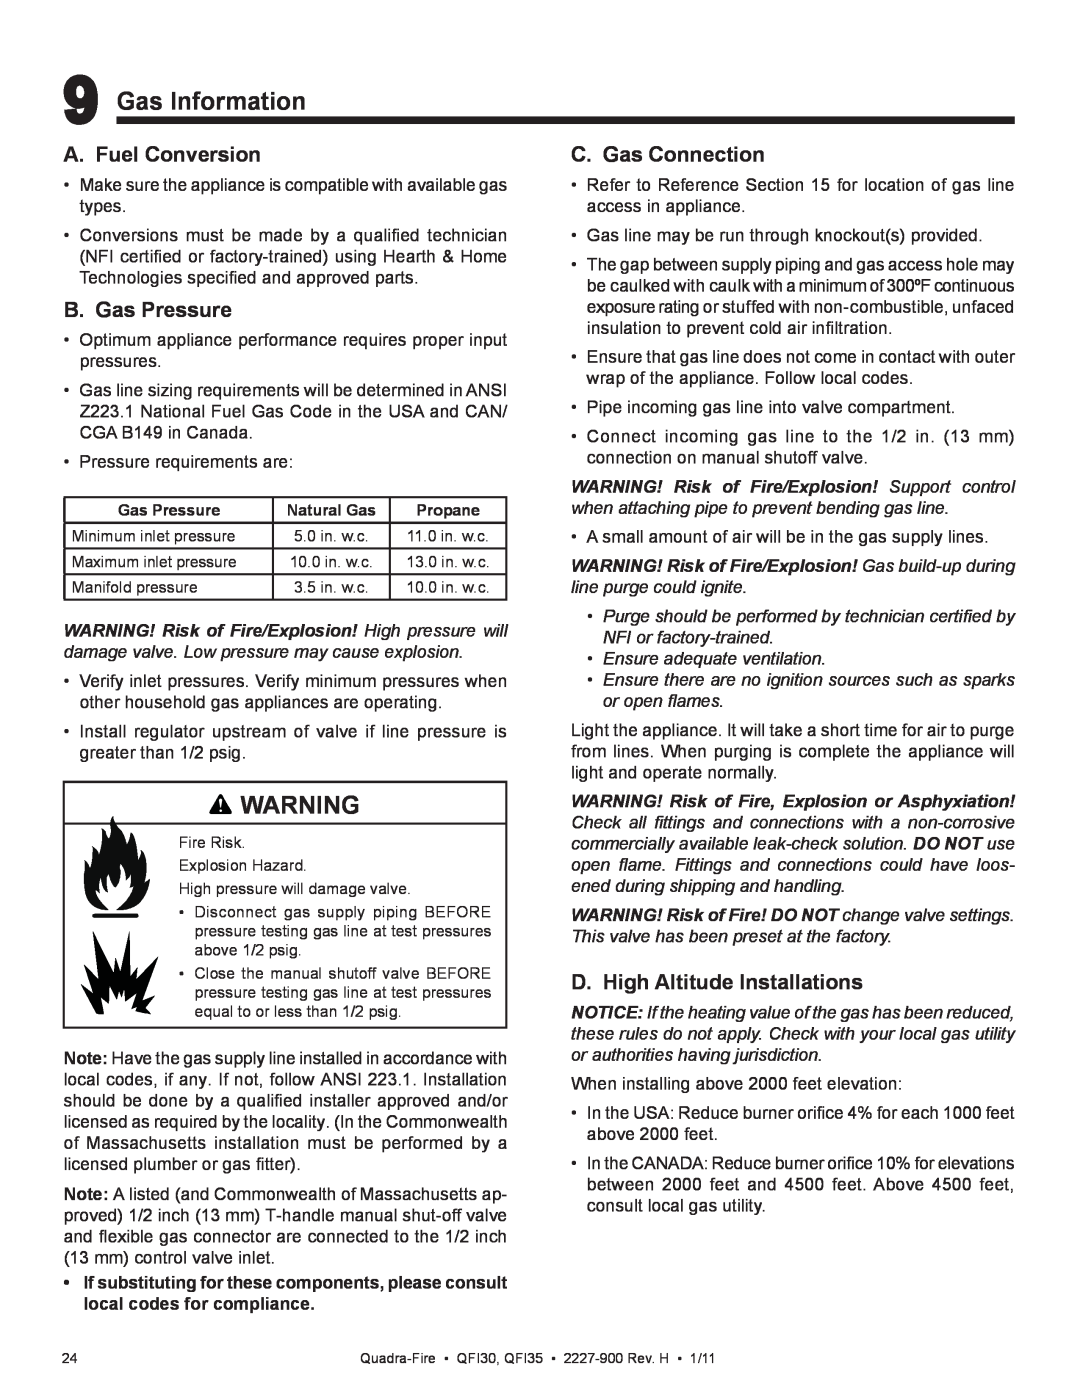 Quadra-Fire QF130 Gas Information, A. Fuel Conversion, B. Gas Pressure, C. Gas Connection, D. High Altitude Installations 